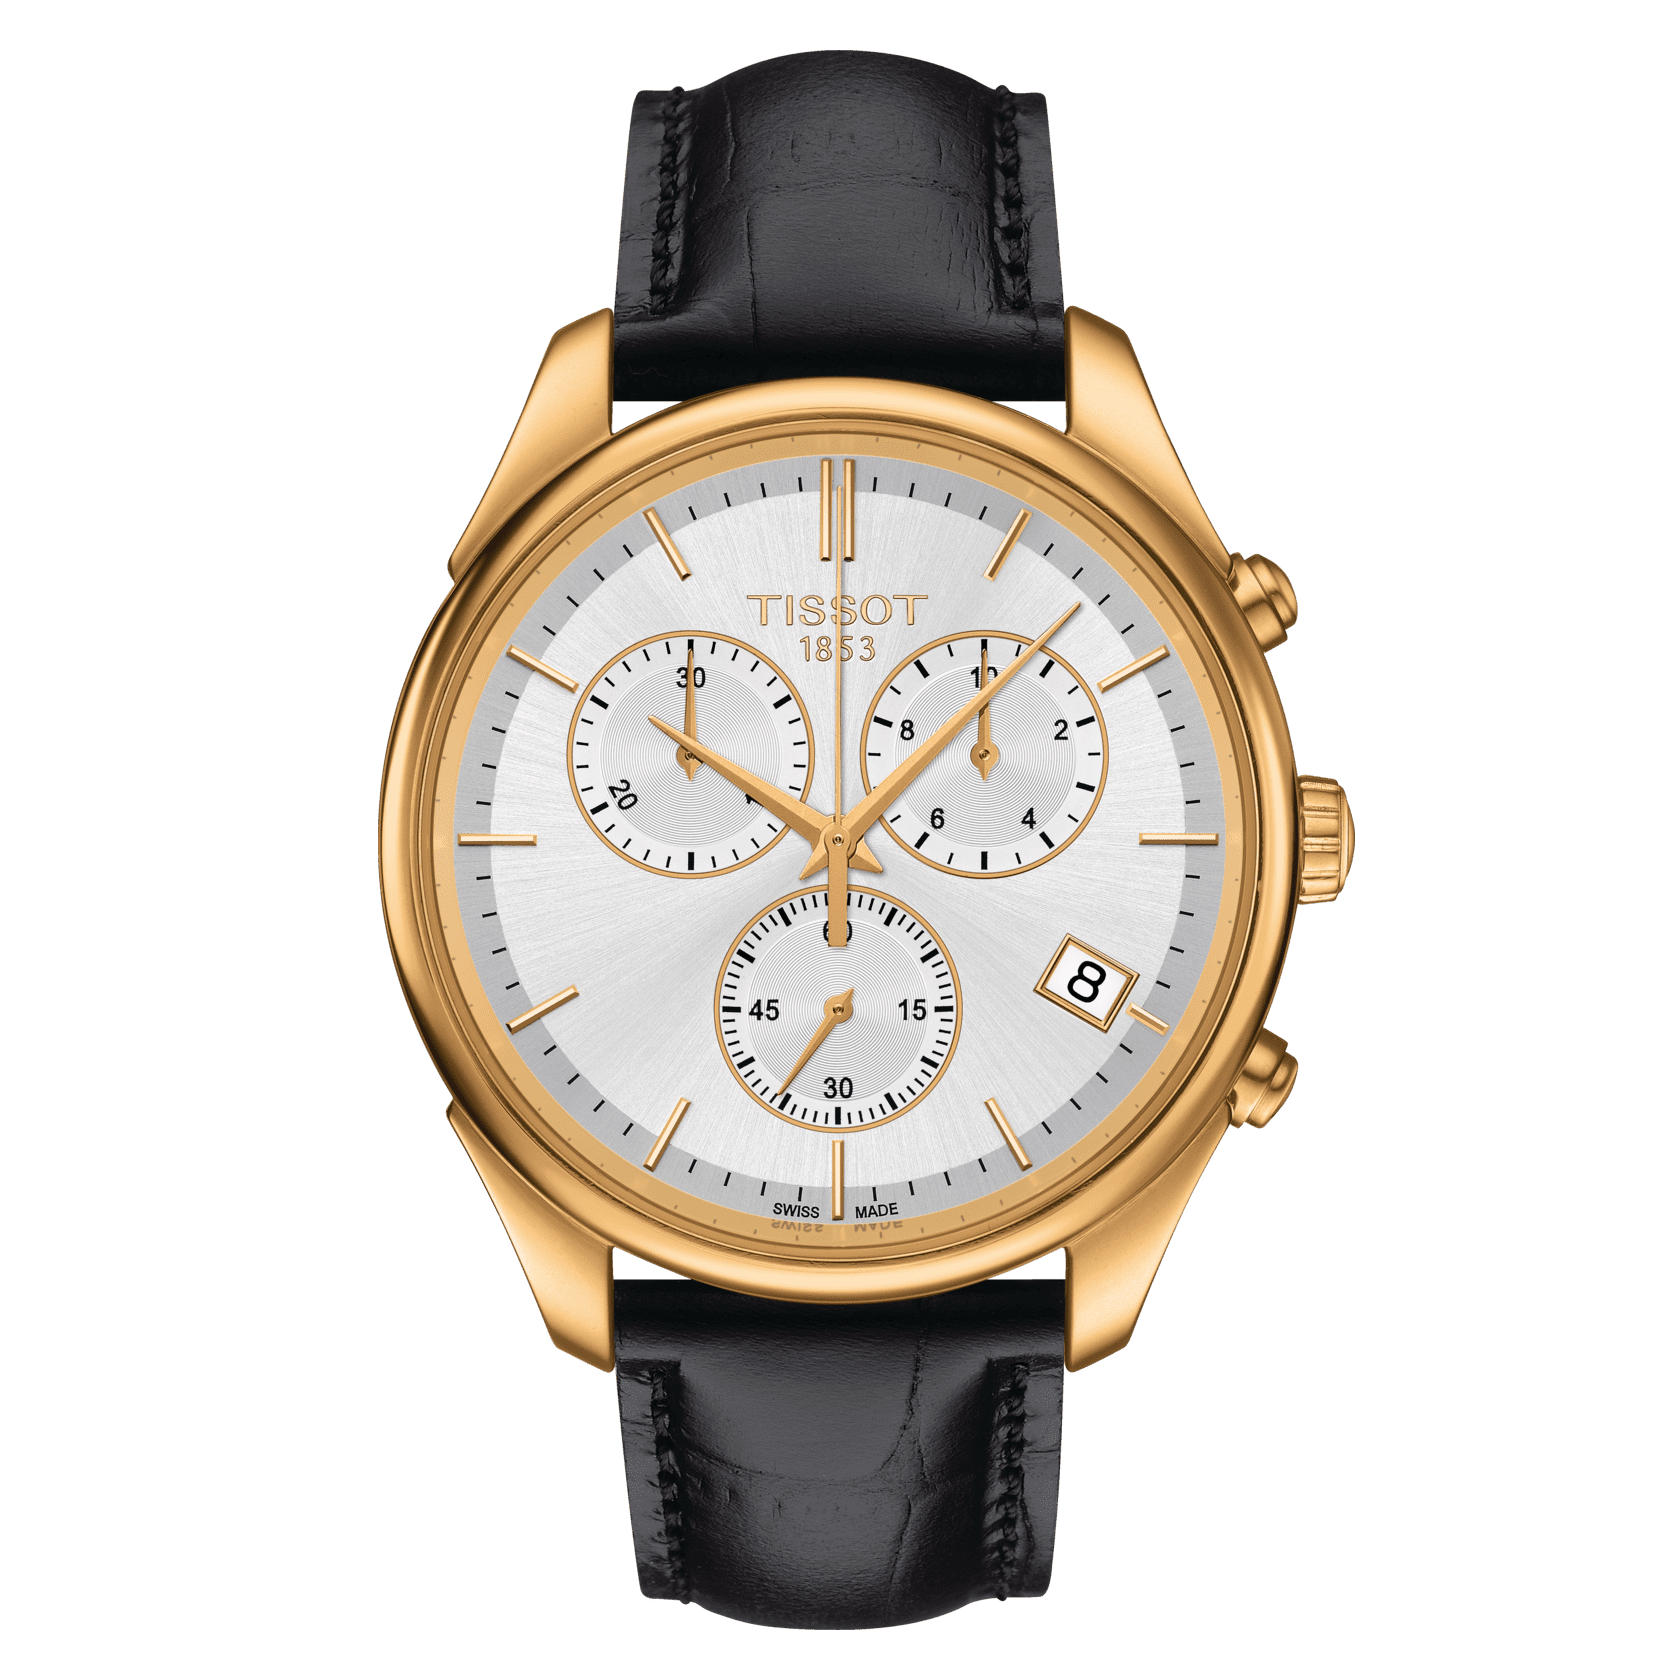 Rolex Watch Replica Vs Omega And Tudor